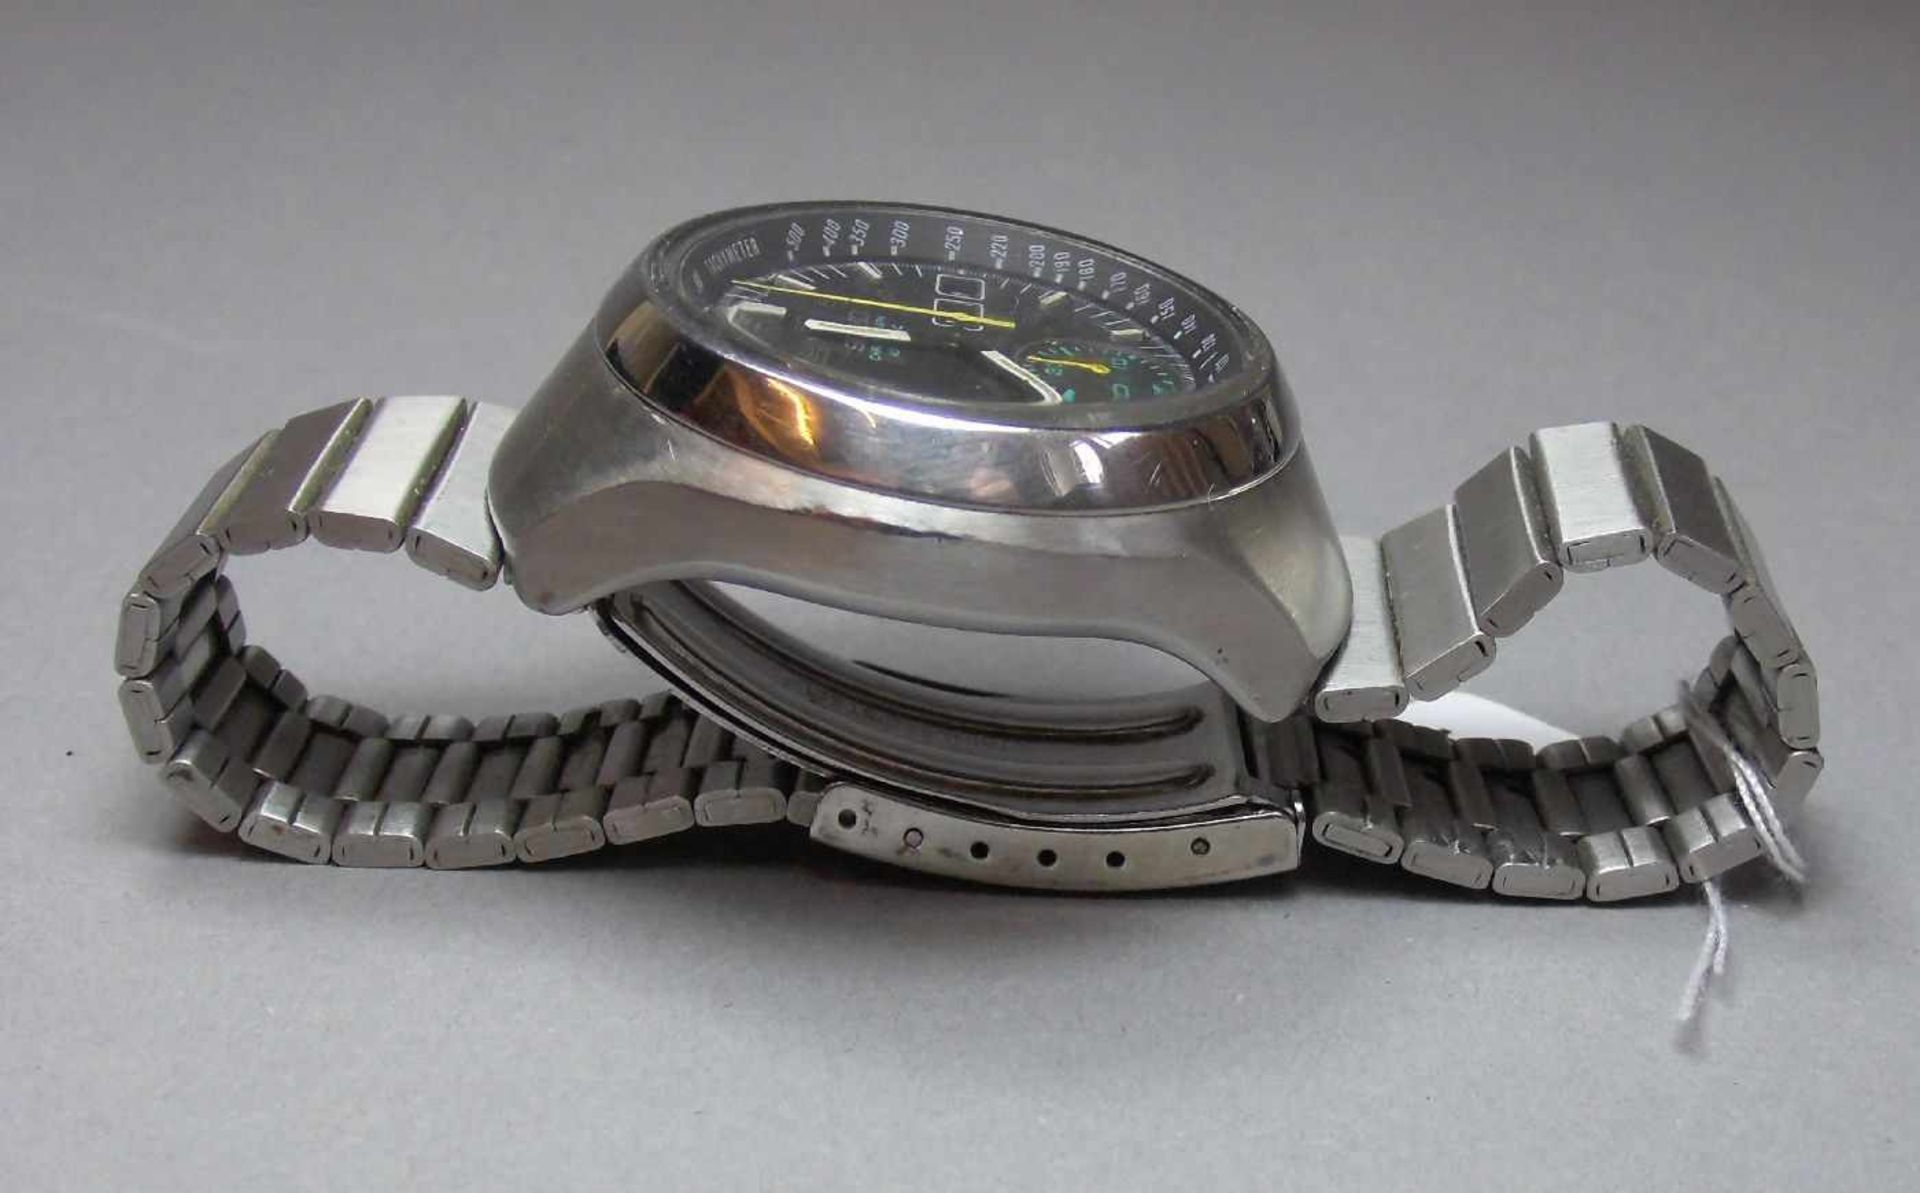 VINTAGE CHRONOGRAPH / ARMBANDUHR : SEIKO - 6139 - 7160 T / wristwatch, Japan, 1970er Jahre, - Image 5 of 8